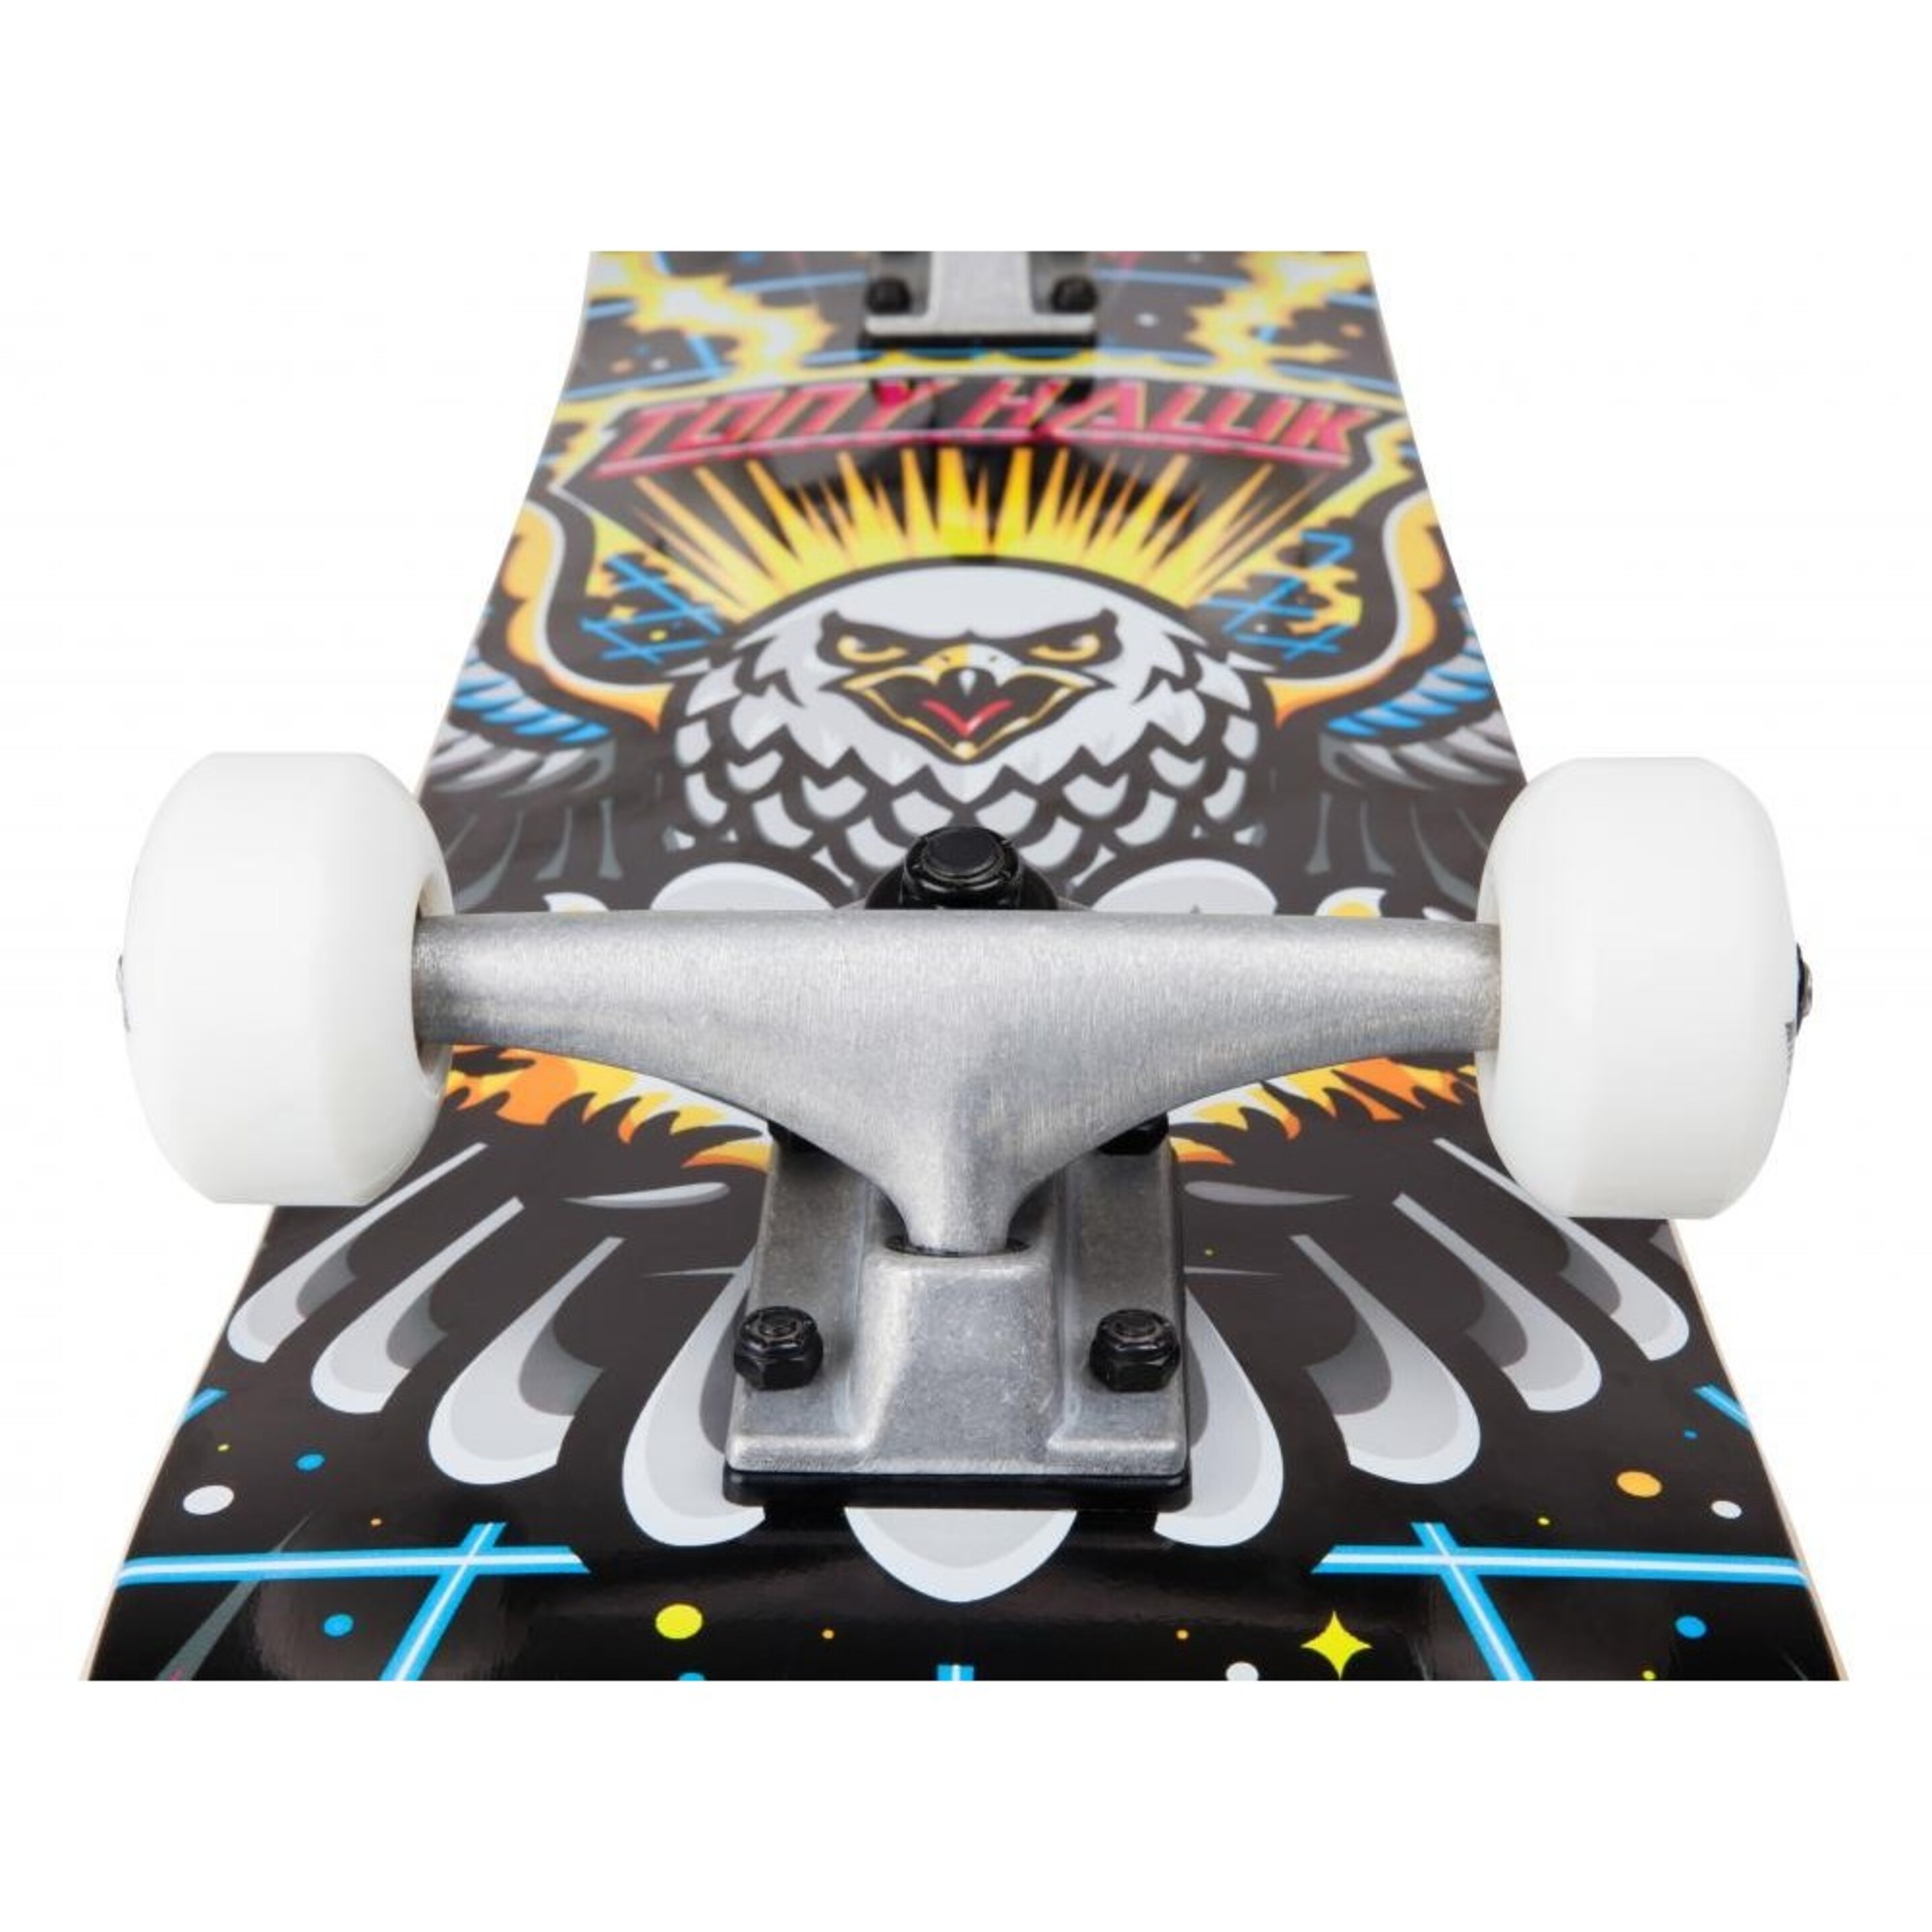 Skate Completo Tony Hawk Ss 180 Arcade 7.5" - Multicolor  MKP